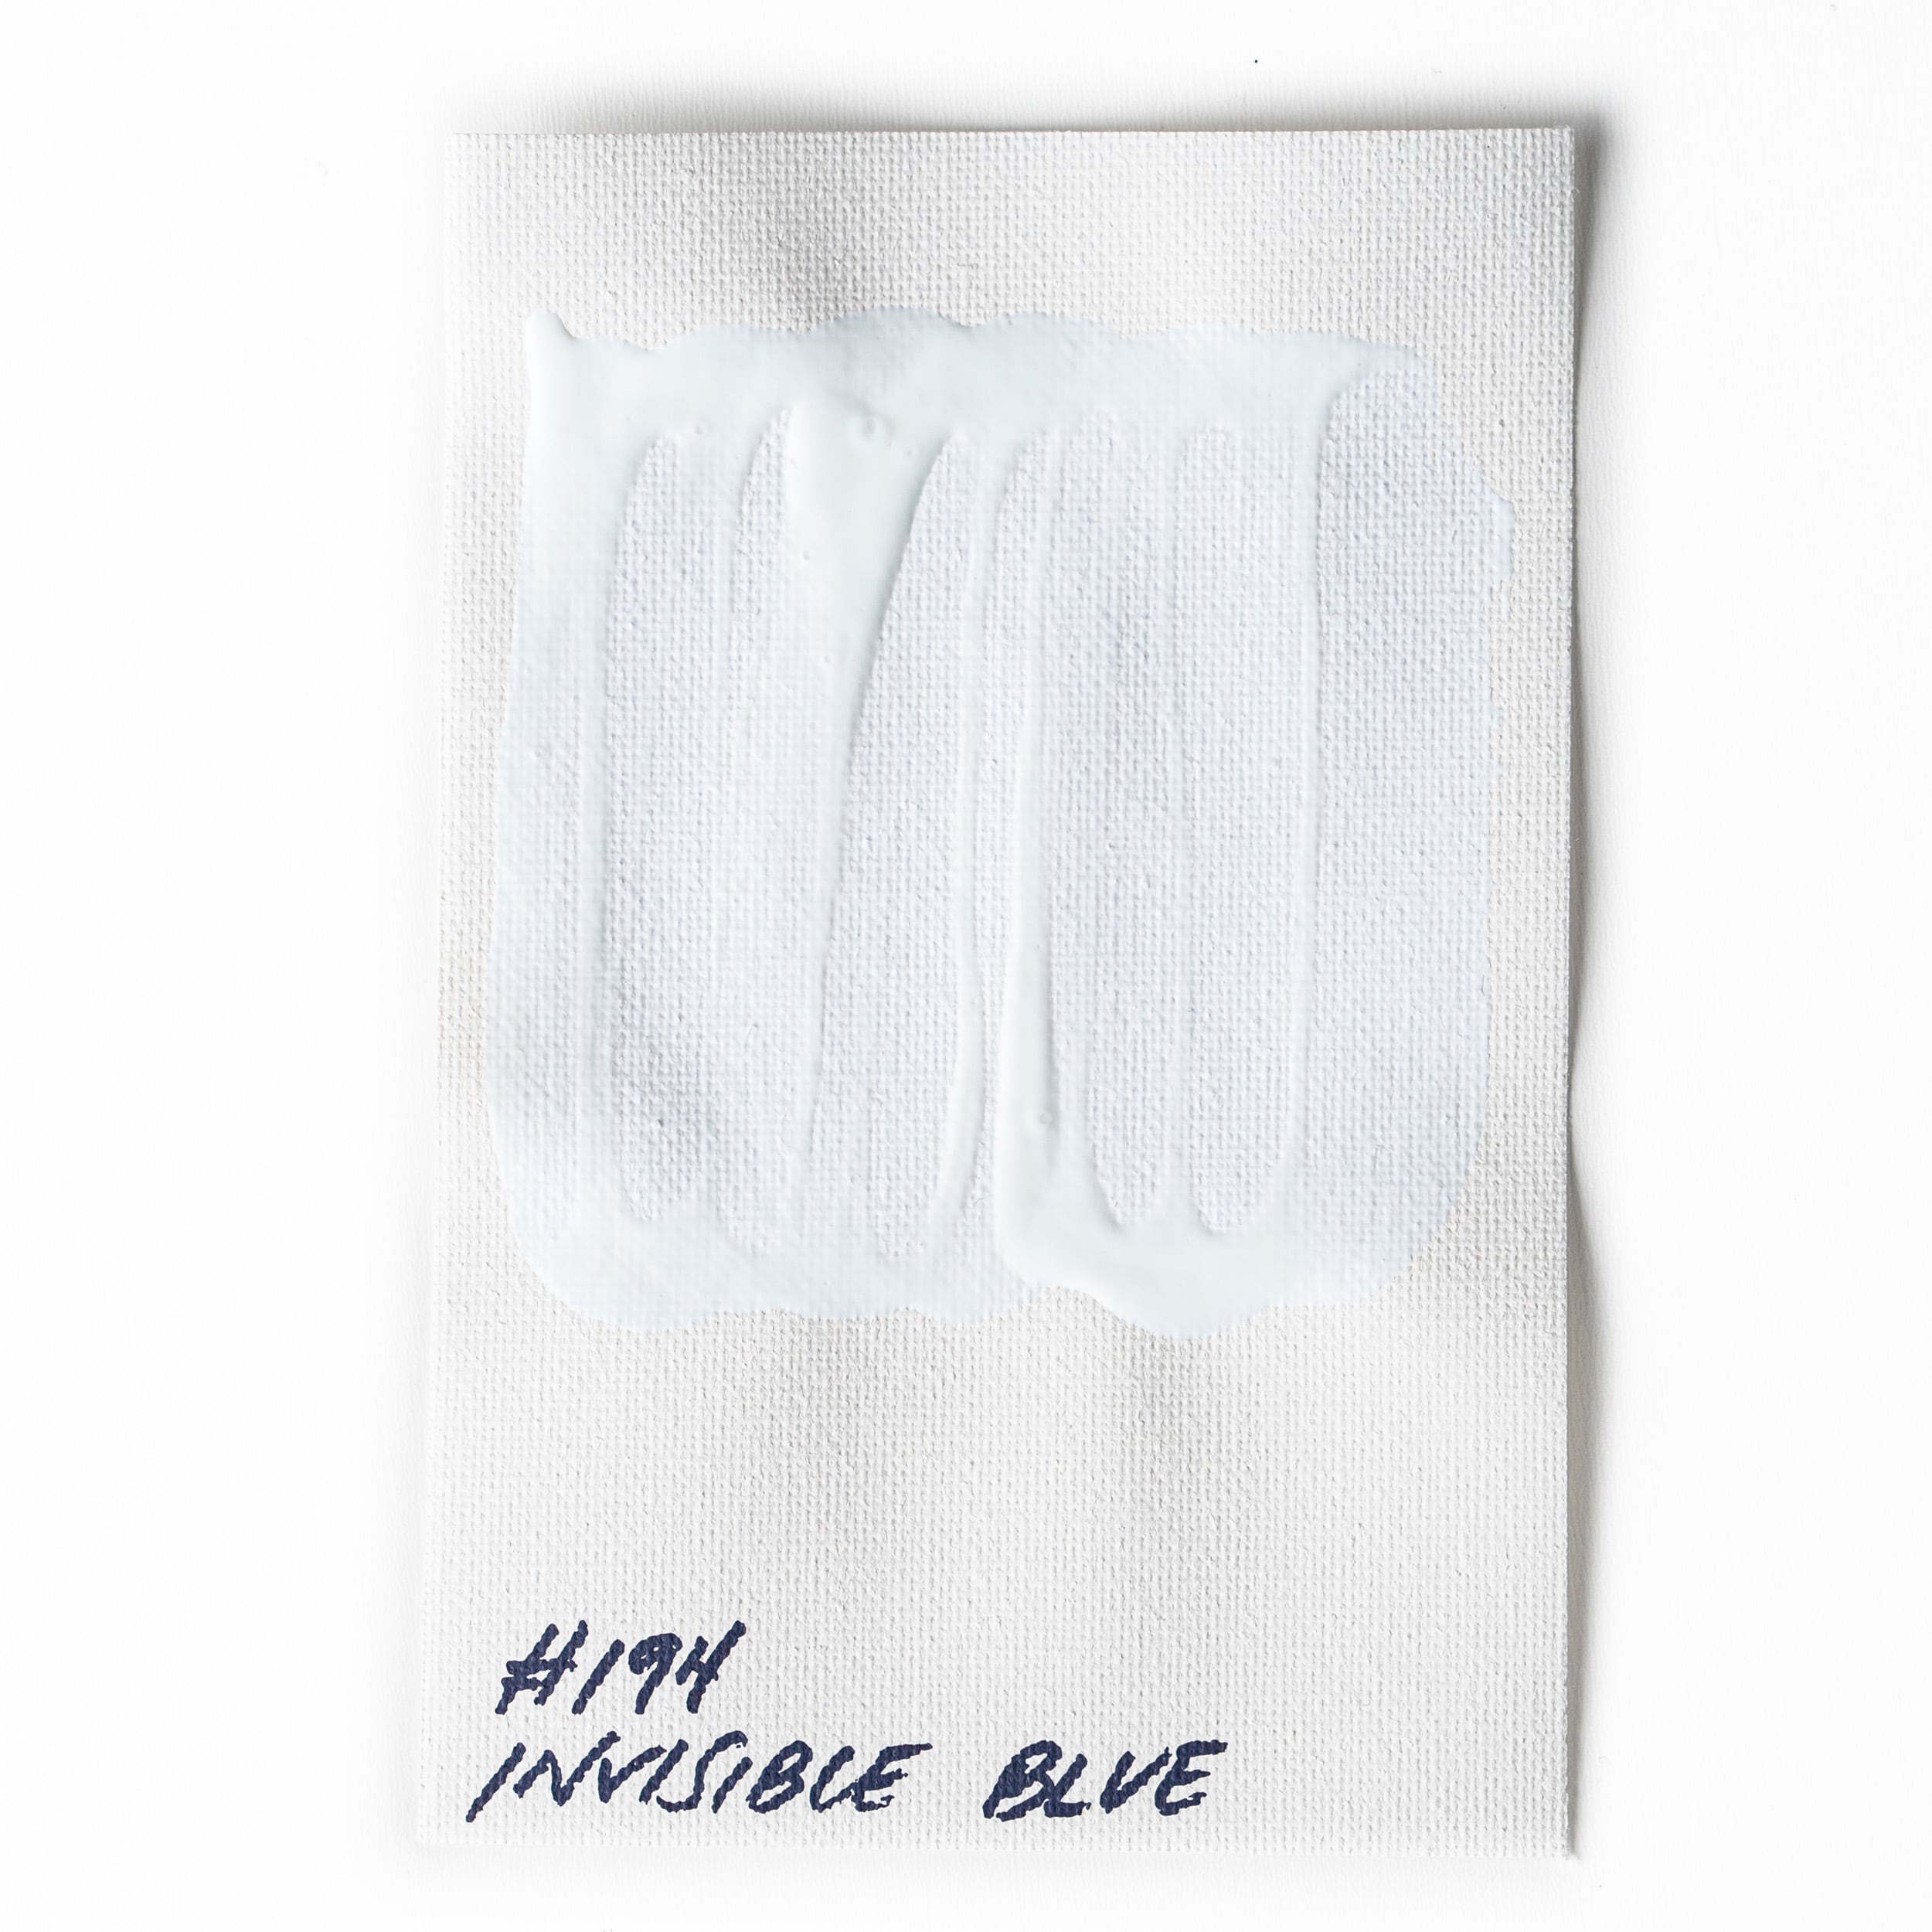 Buy #194 Fluorescent Invisible Blue - Lightfastness:, - Transparent  Online